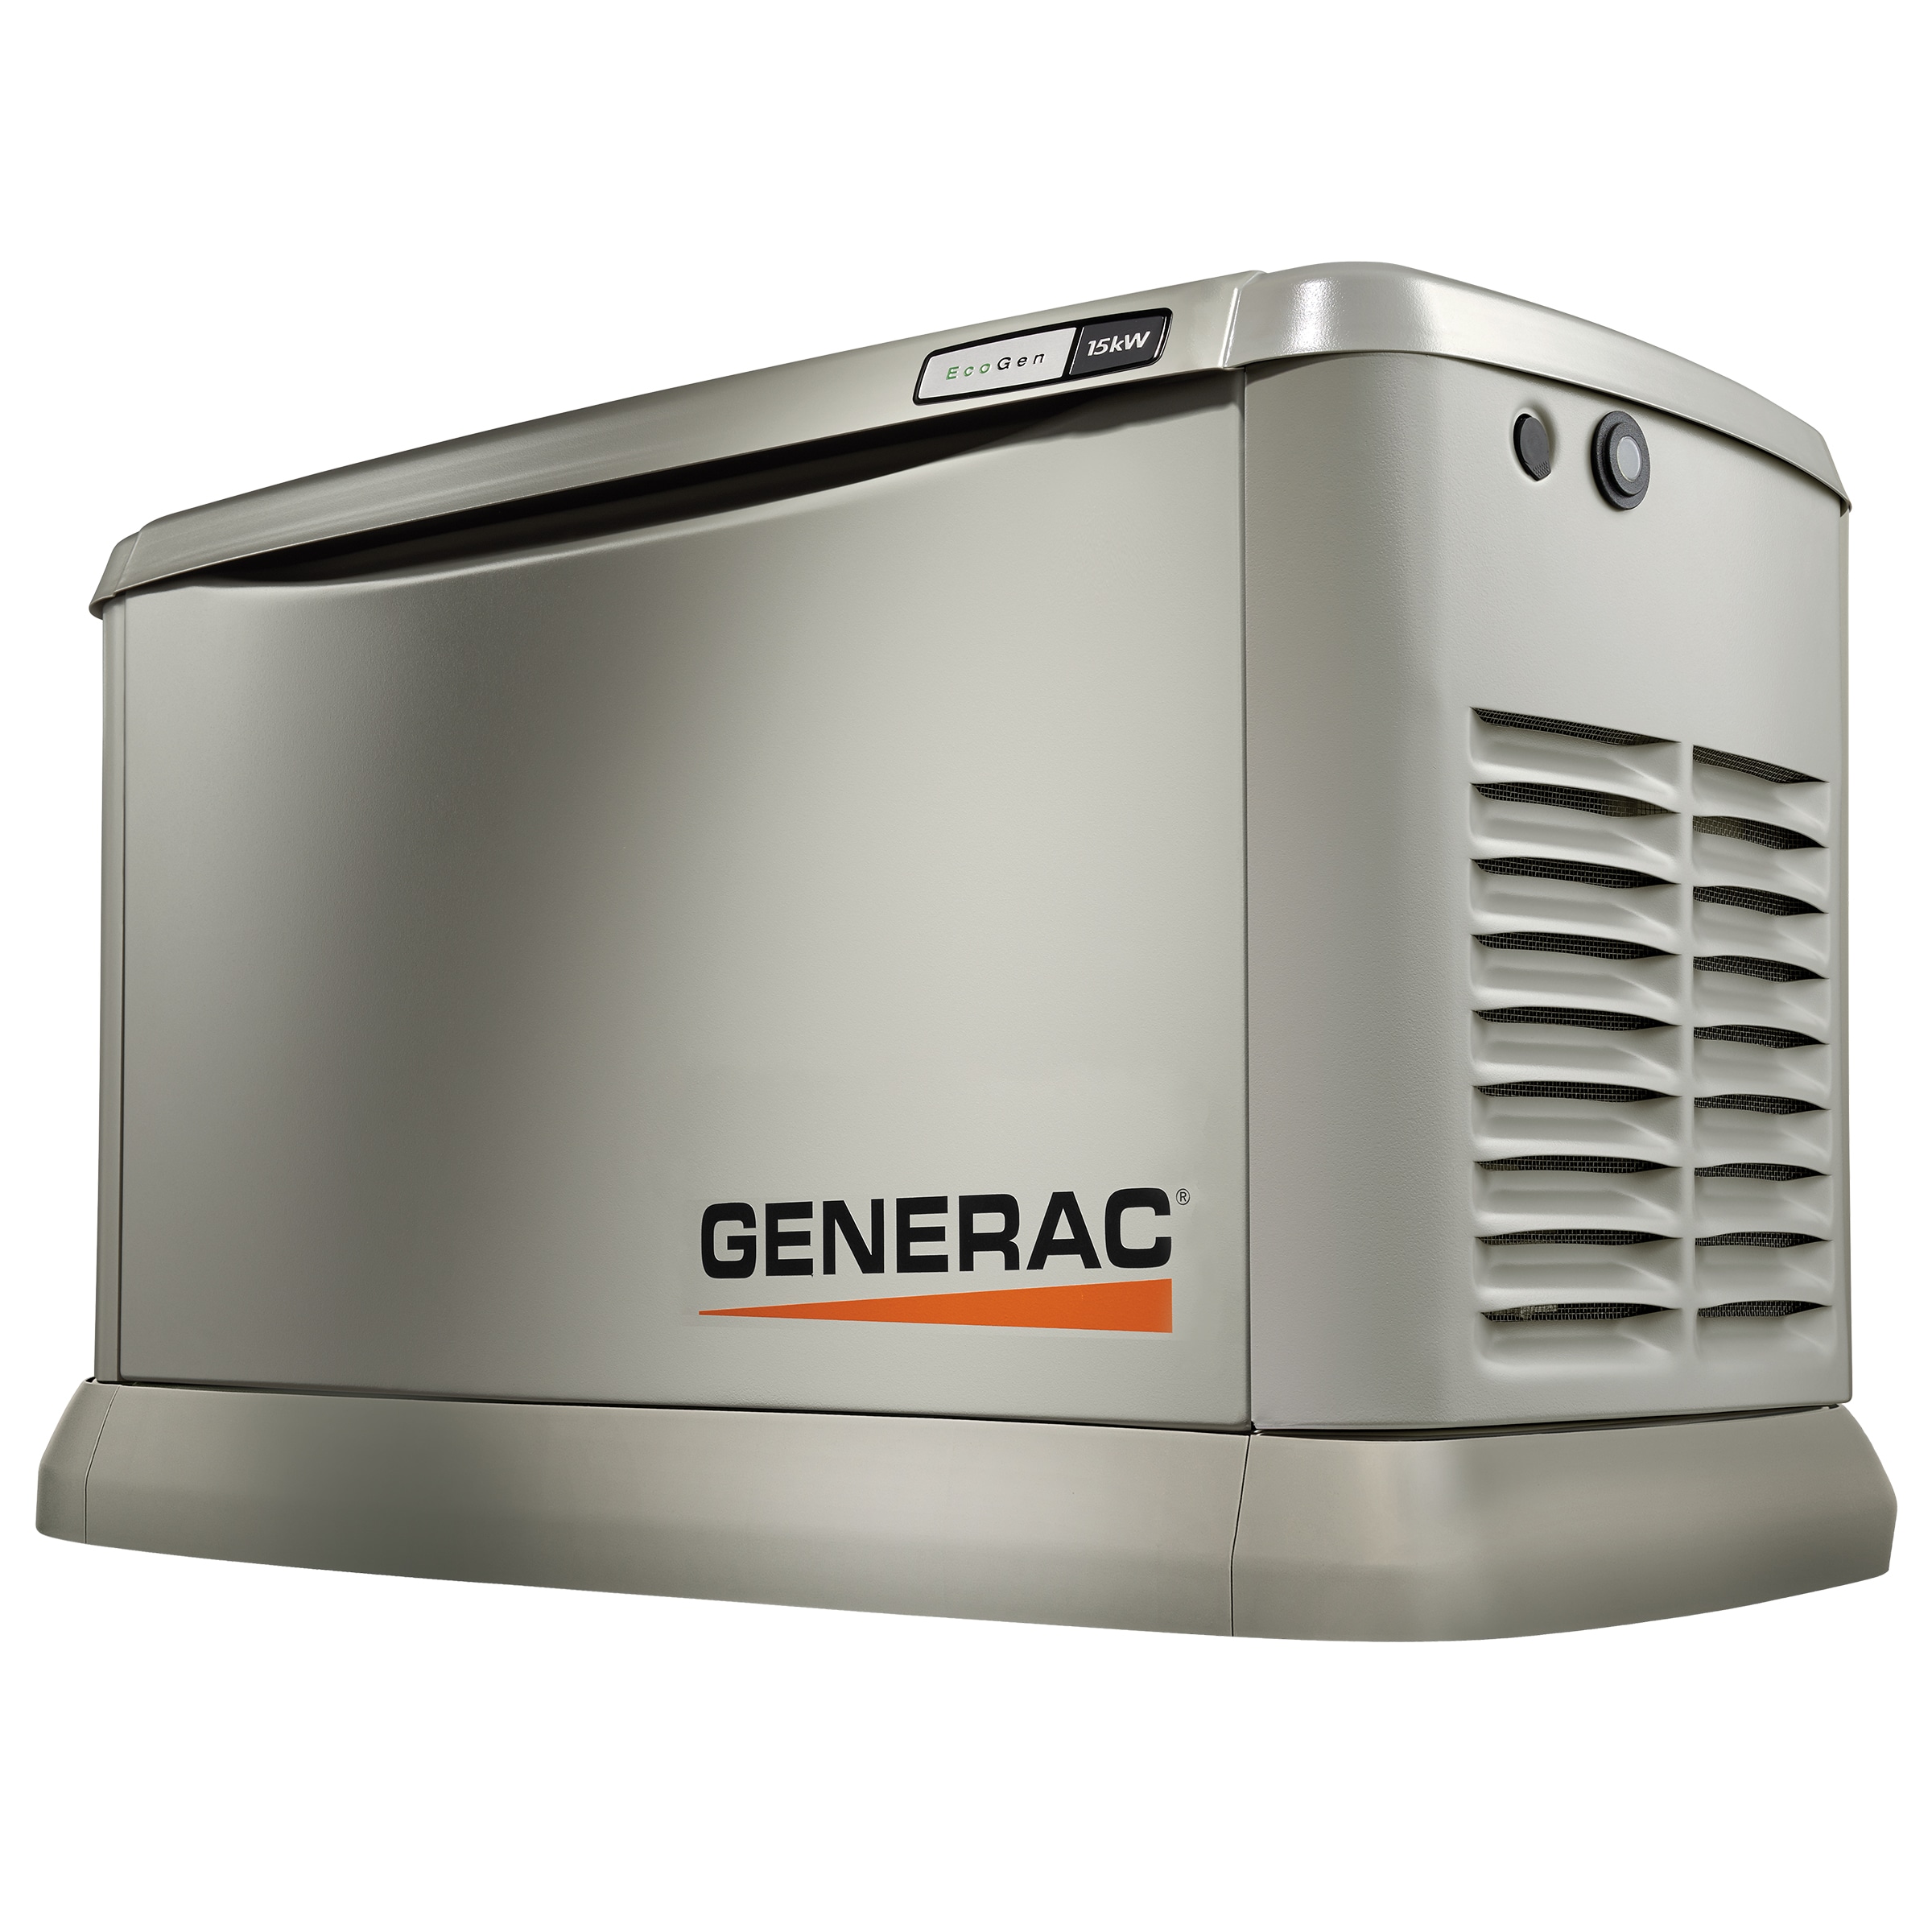 Generac 15000-Watt (LP) / 15000-Watt (NG) Standby Generator in Home Standby Generators department at Lowes.com